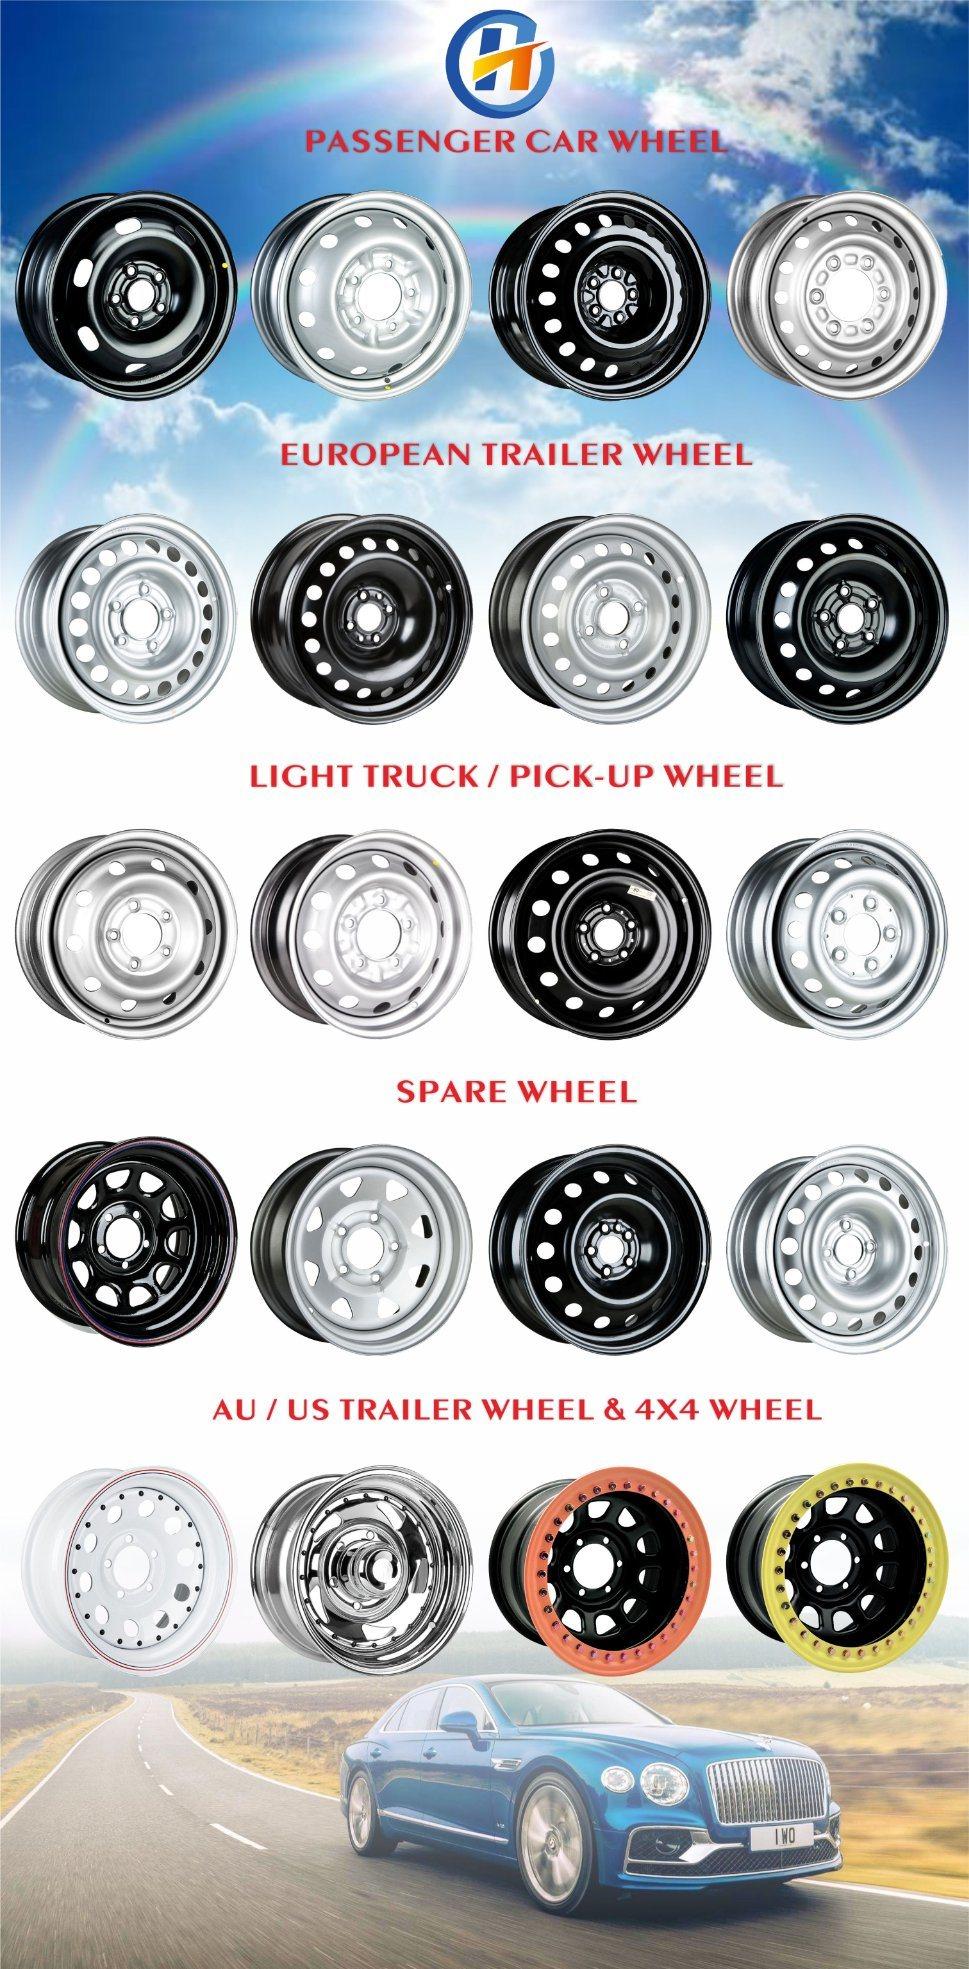 H&T Wheel 444208 14 Inch 14X5.0 4X100 Coated 4 Holes Black Steel Car Wheel Rim